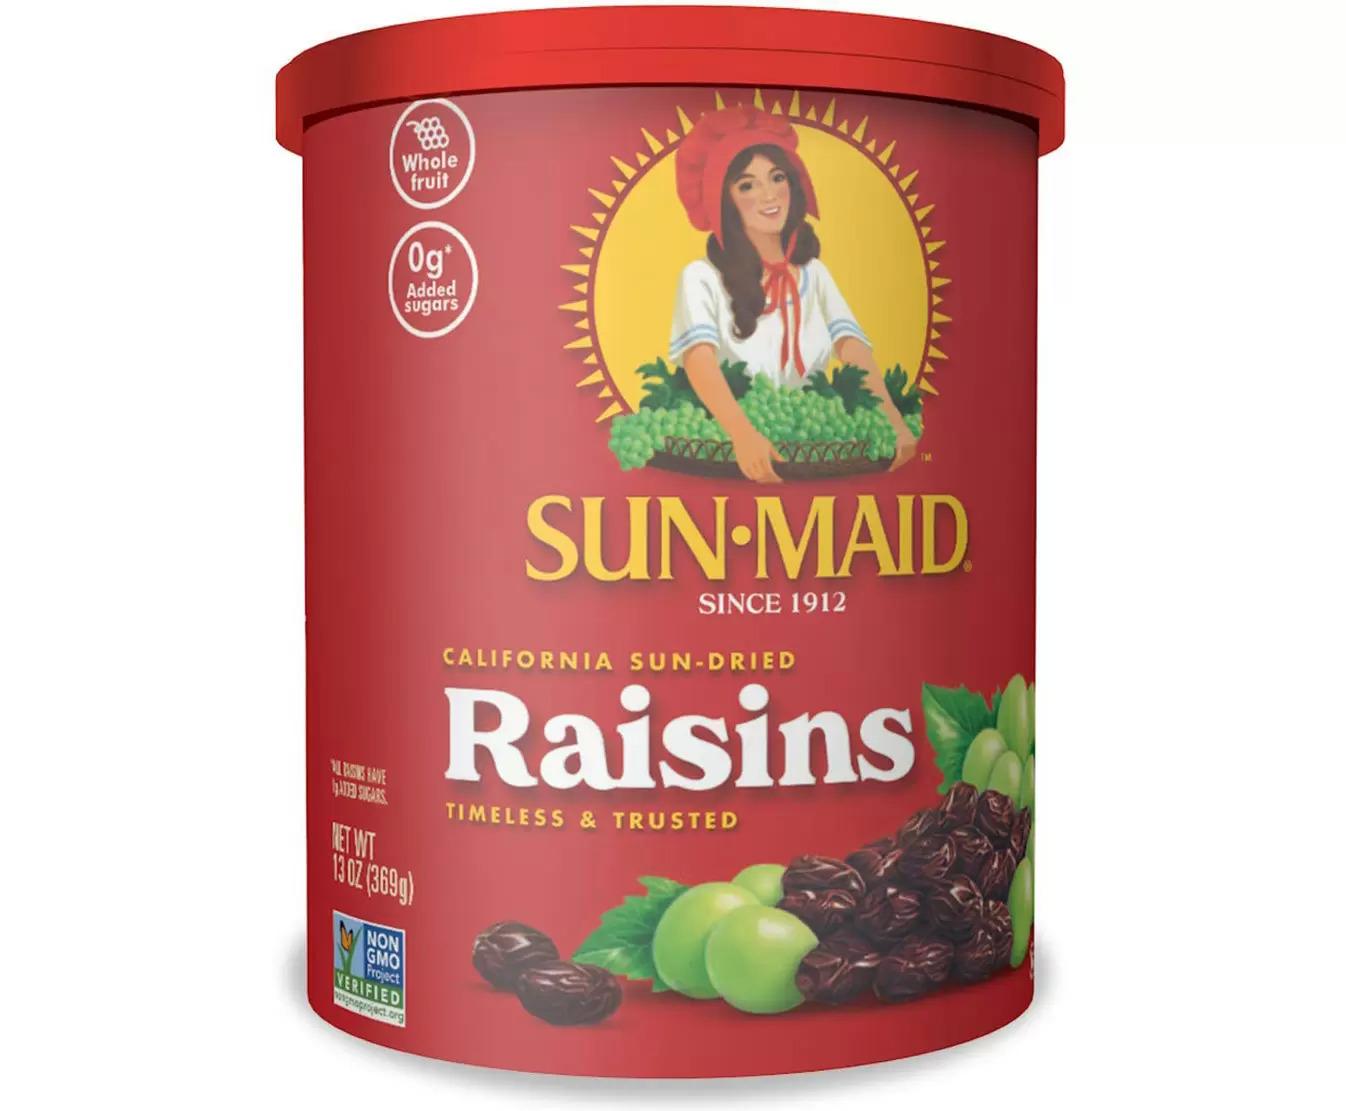 Sun-Maid California Sun-Dried Raisins Resealable Canister for $2.84